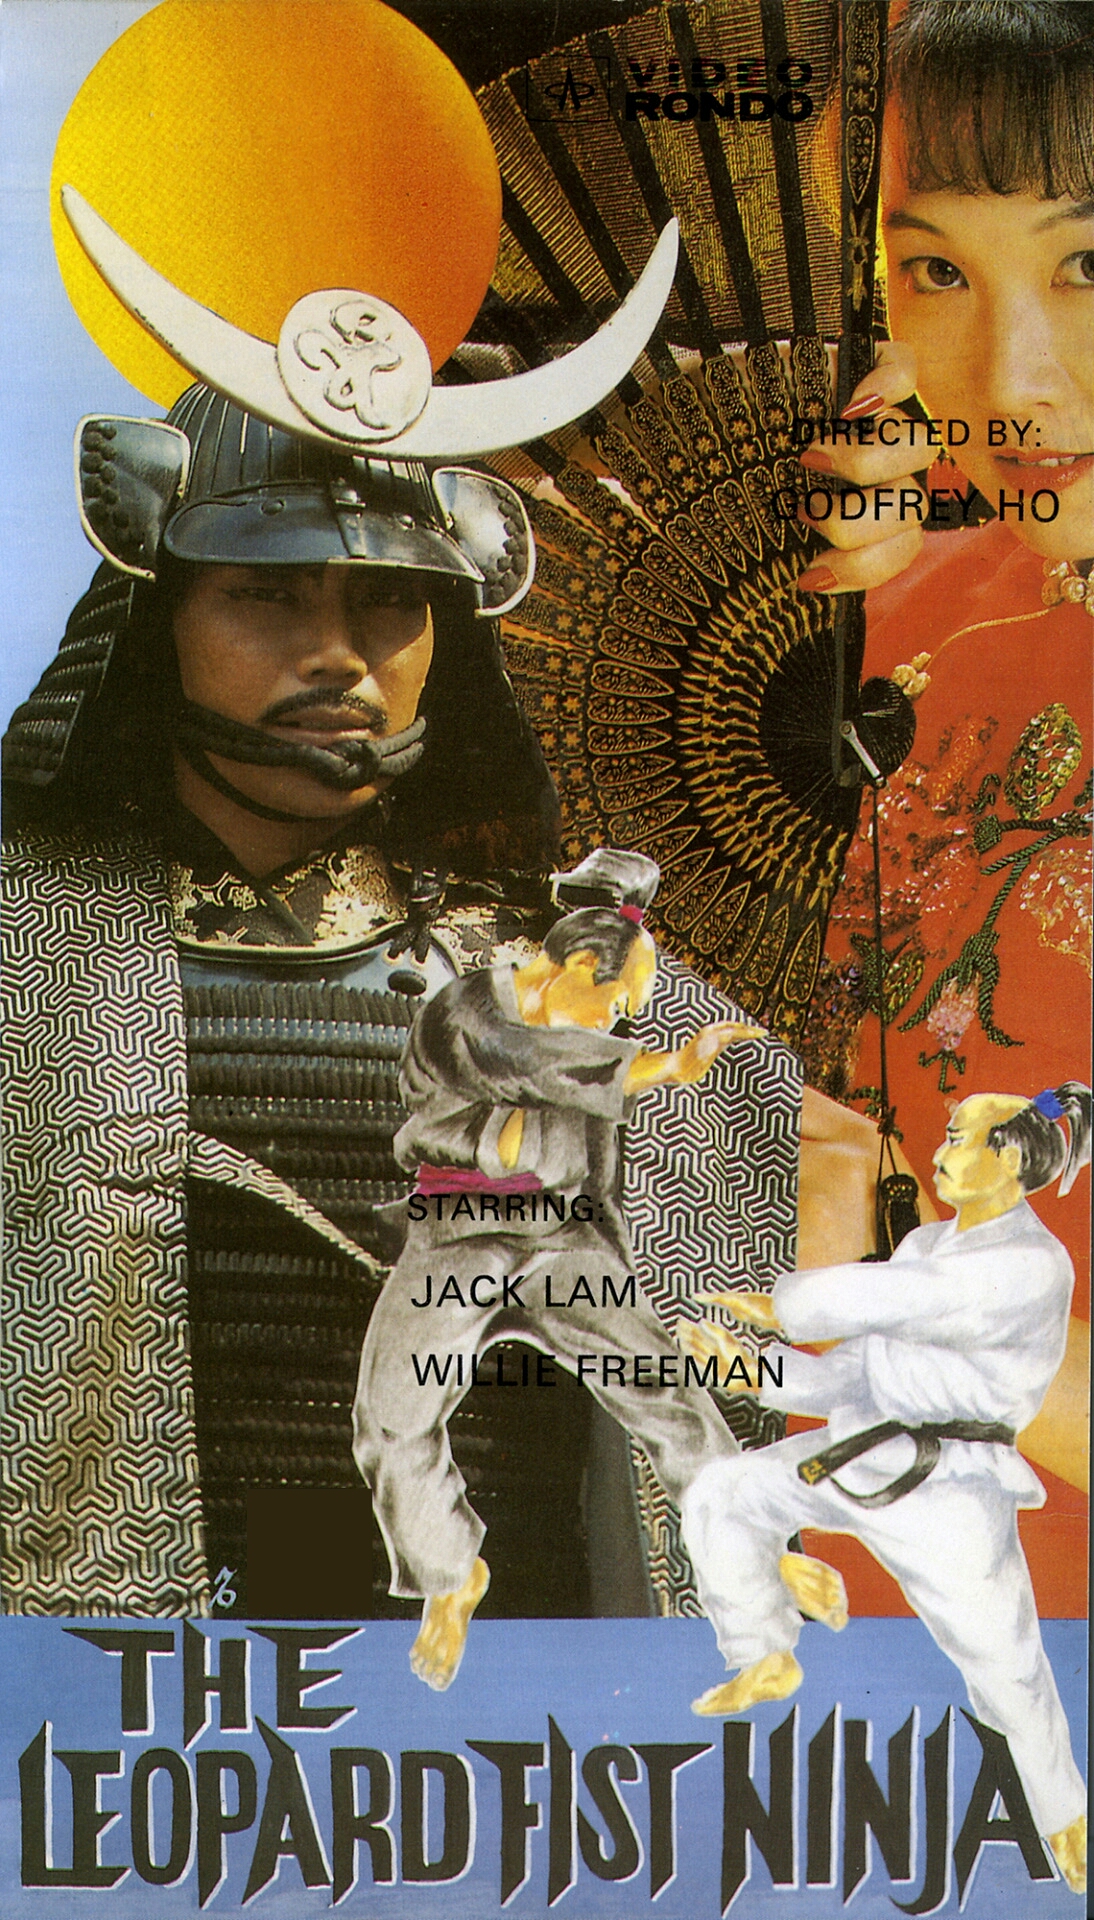 Leopard Fist Ninja (1982) with English Subtitles on DVD on DVD